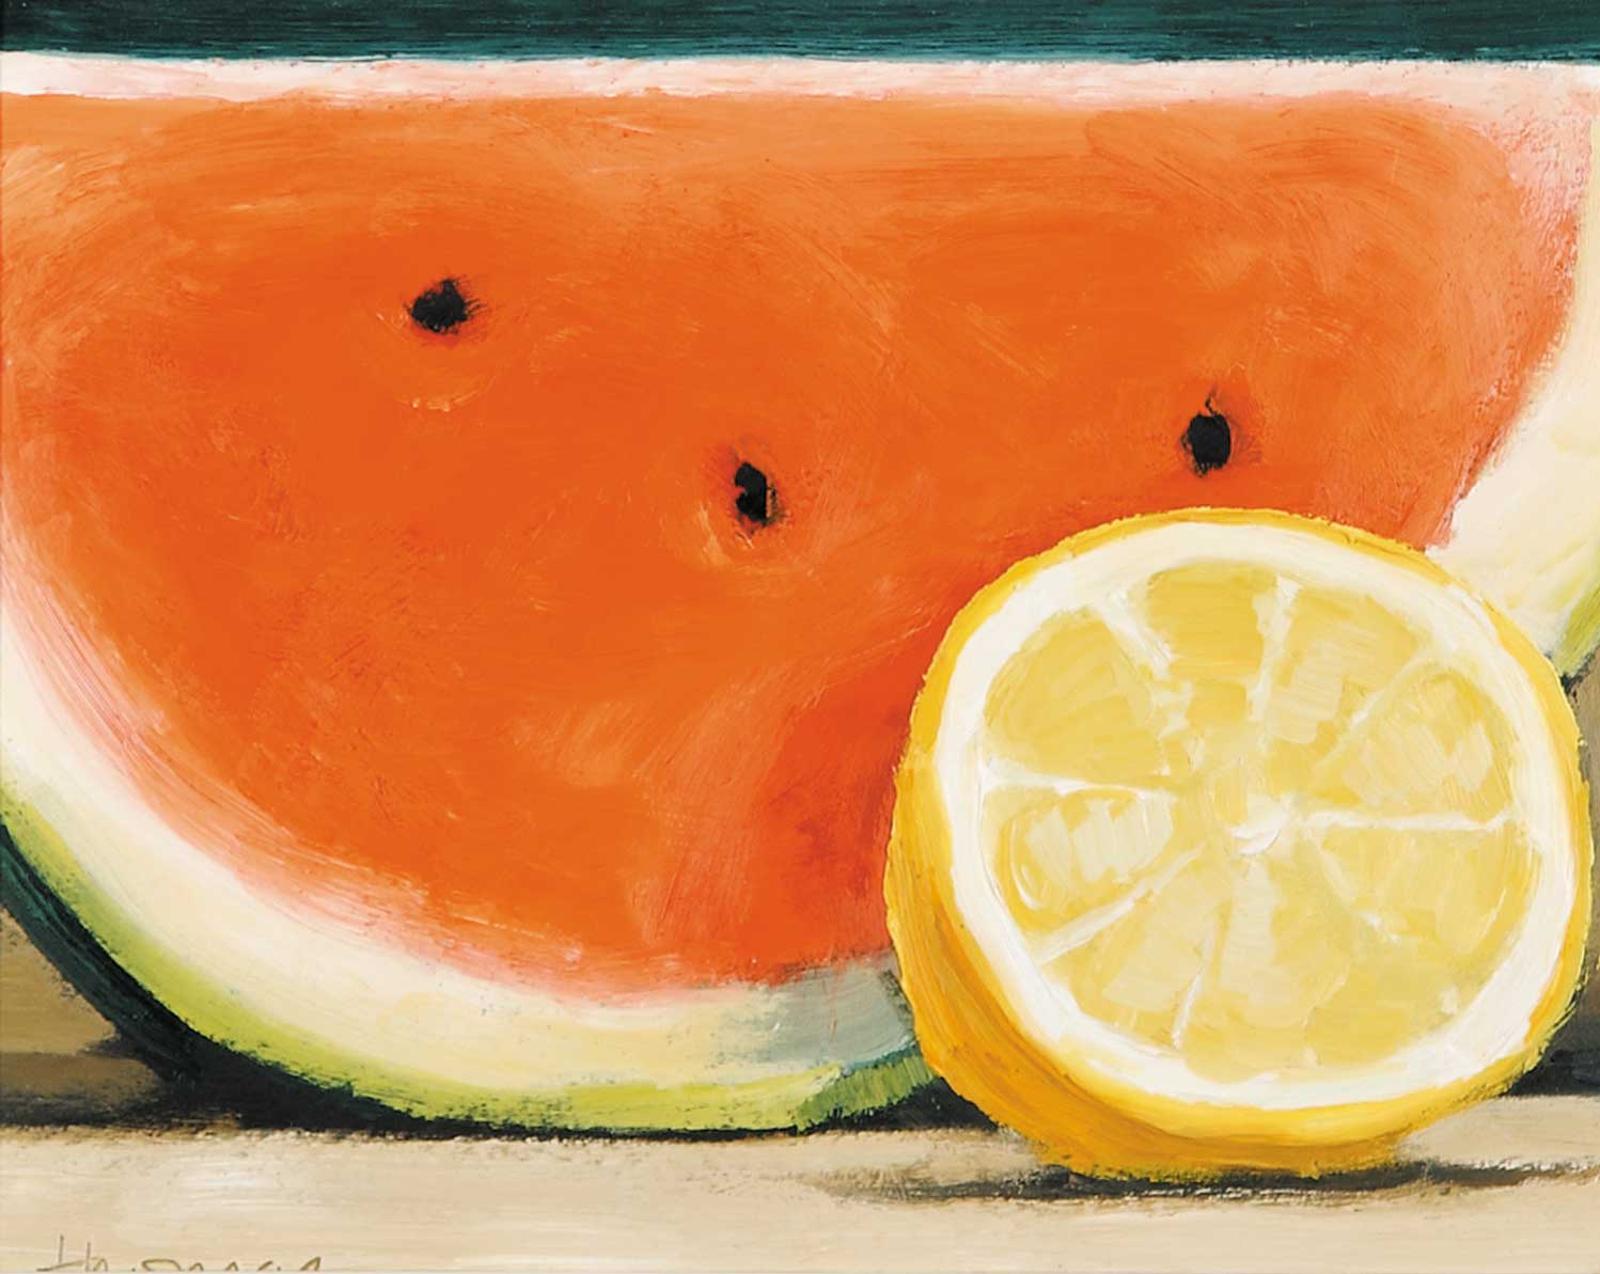 Les Thomas (1962) - Watermelon and Lemon